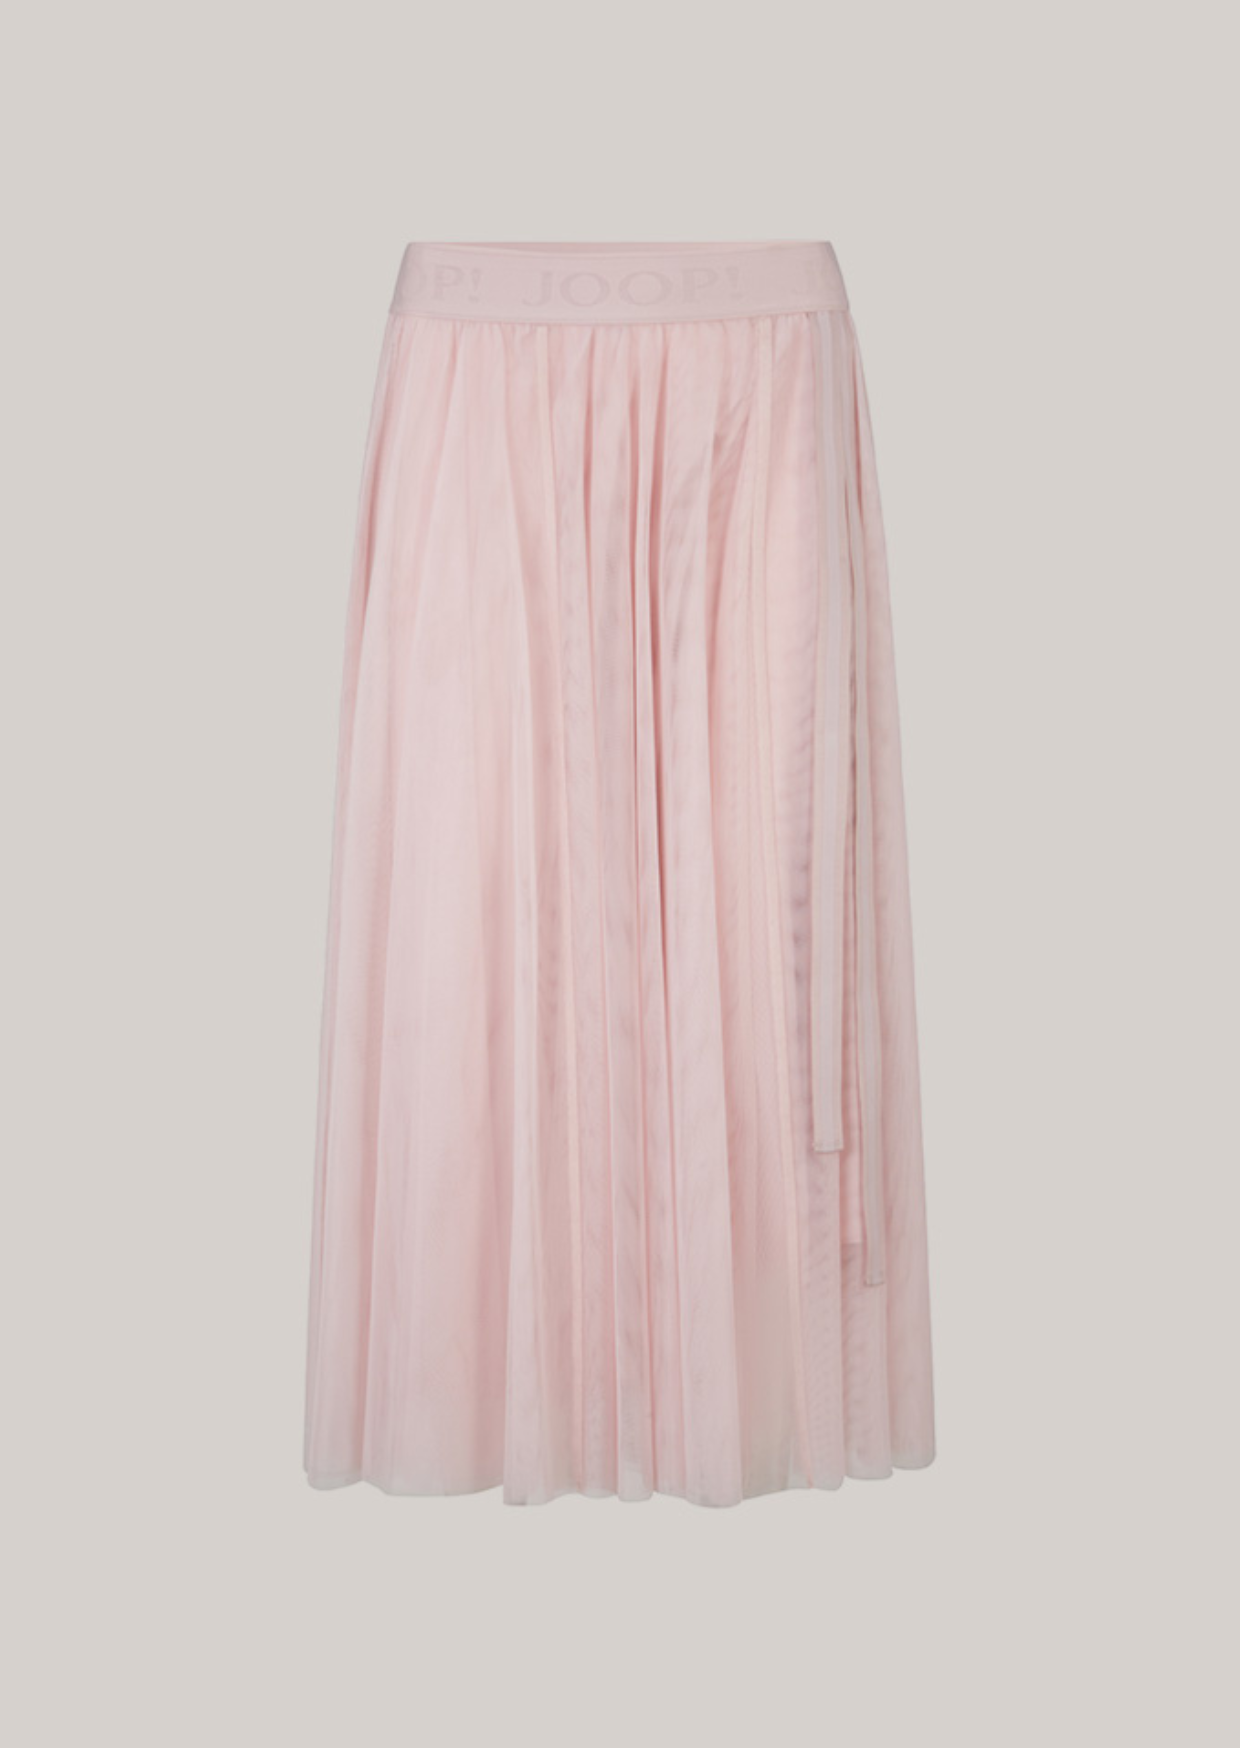 joop Skirt pink 